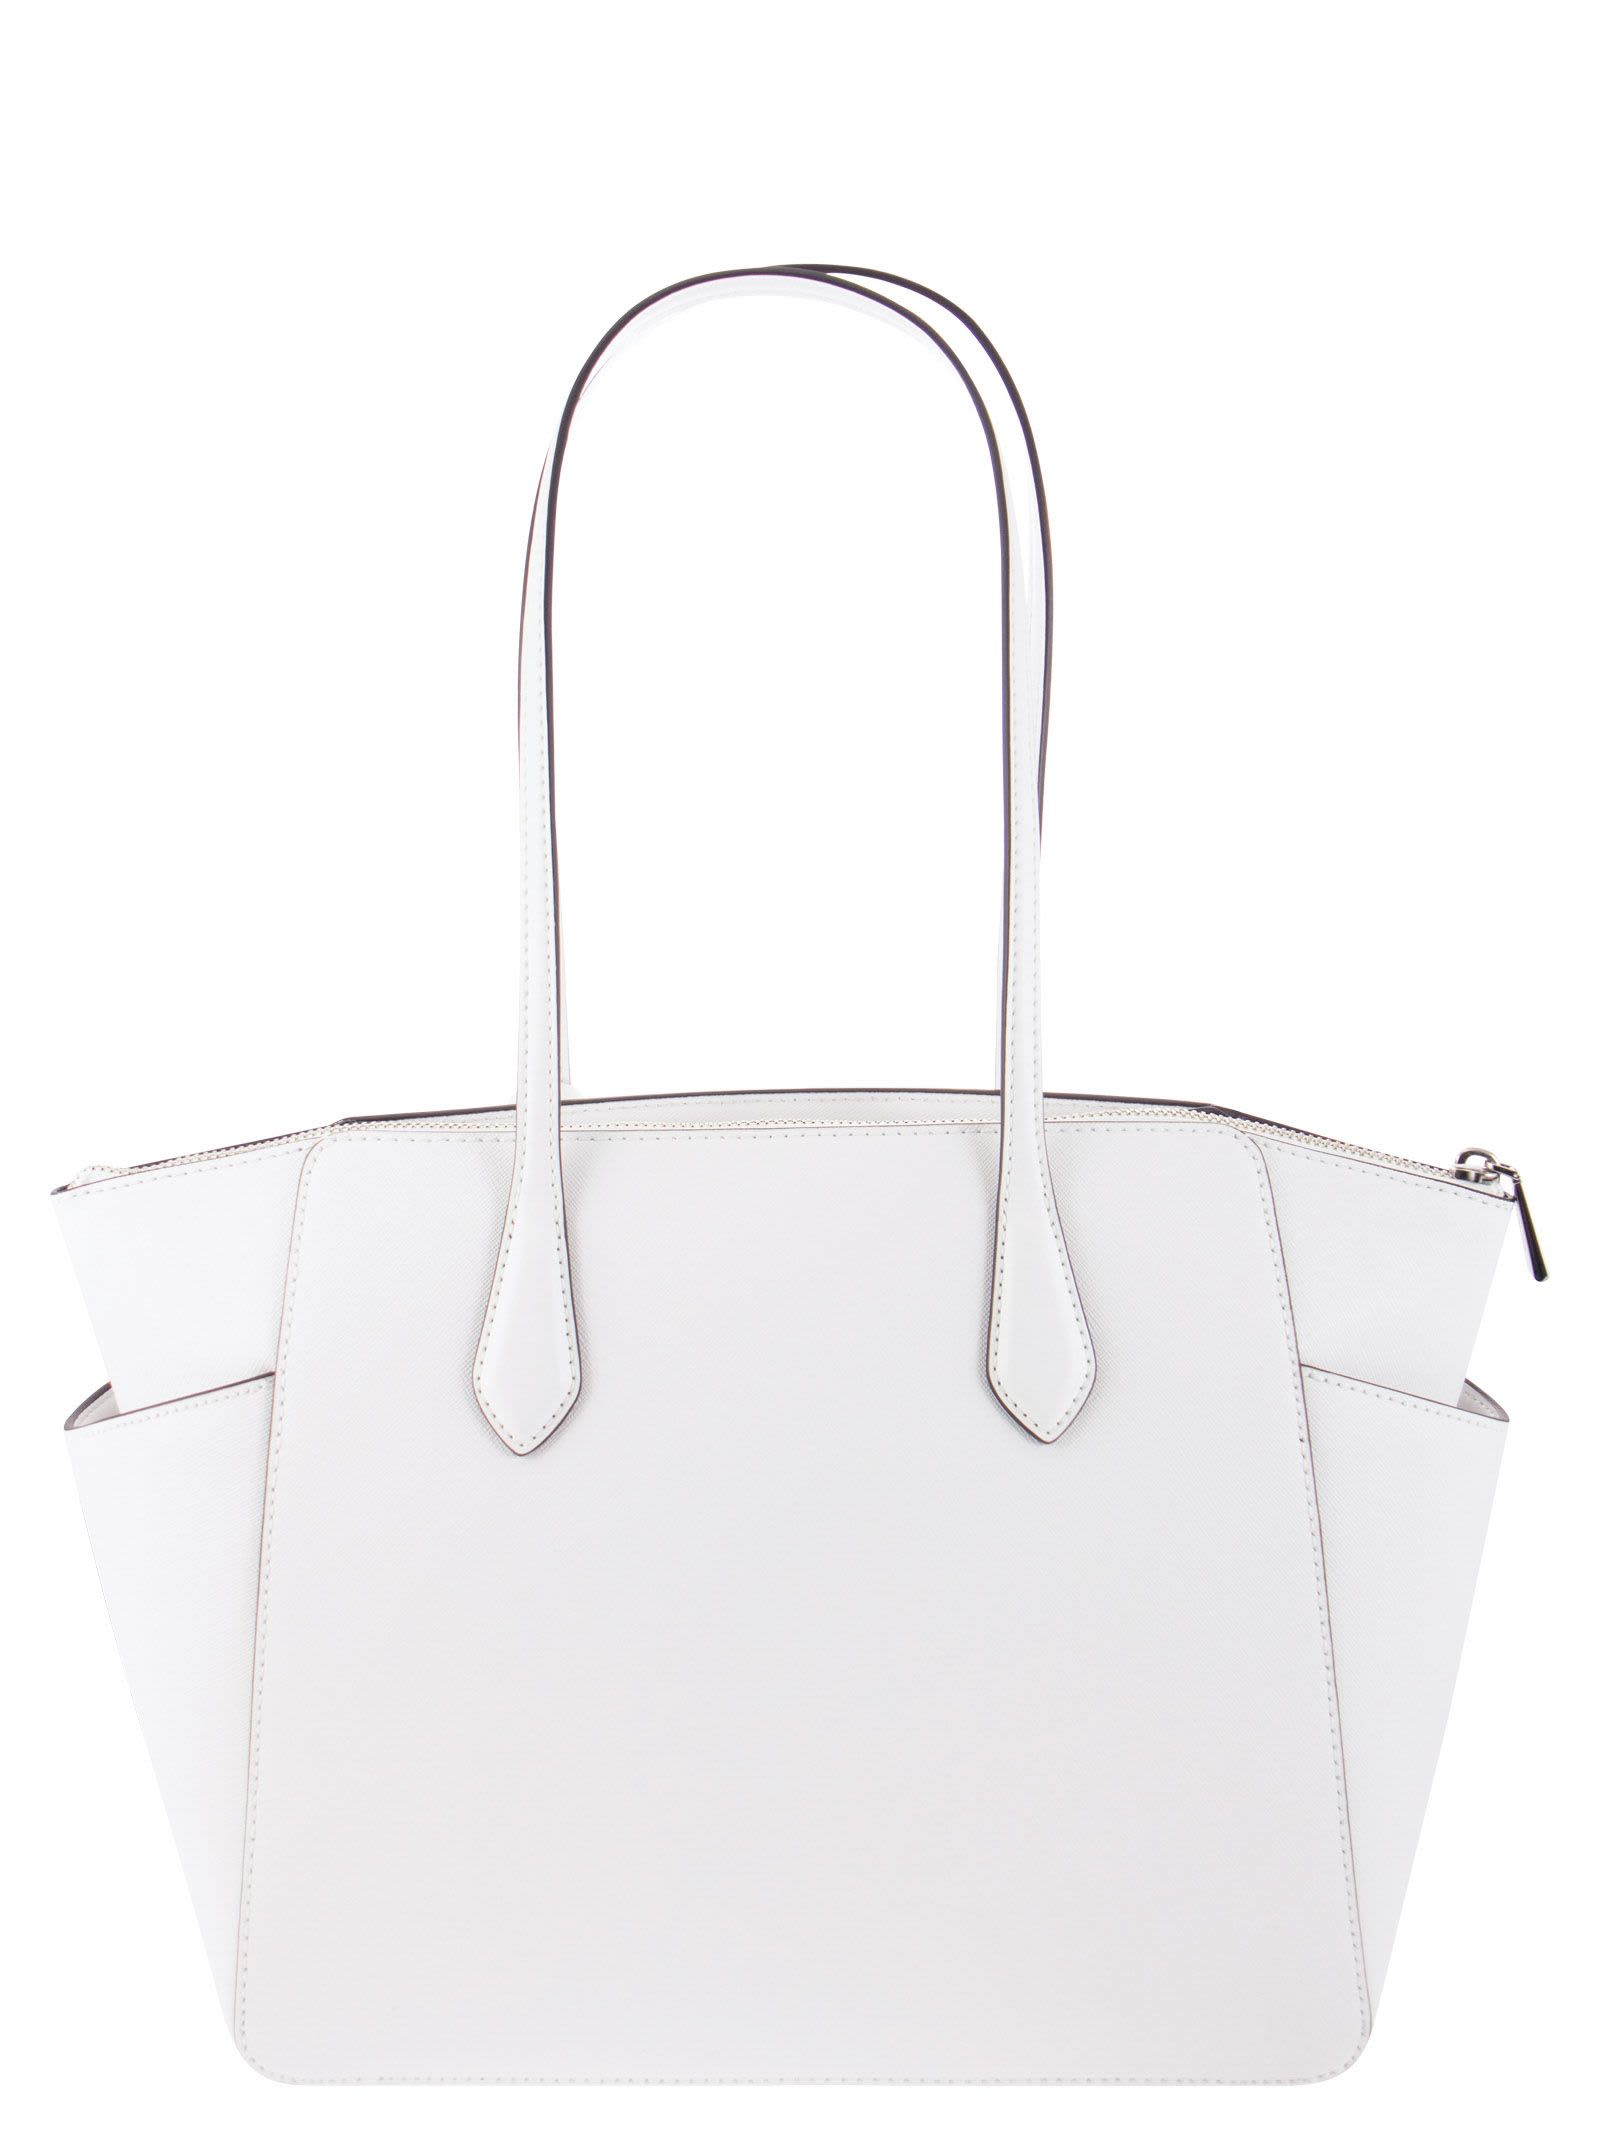 Calvin Klein Saffiano Tote Bag, $310, .com